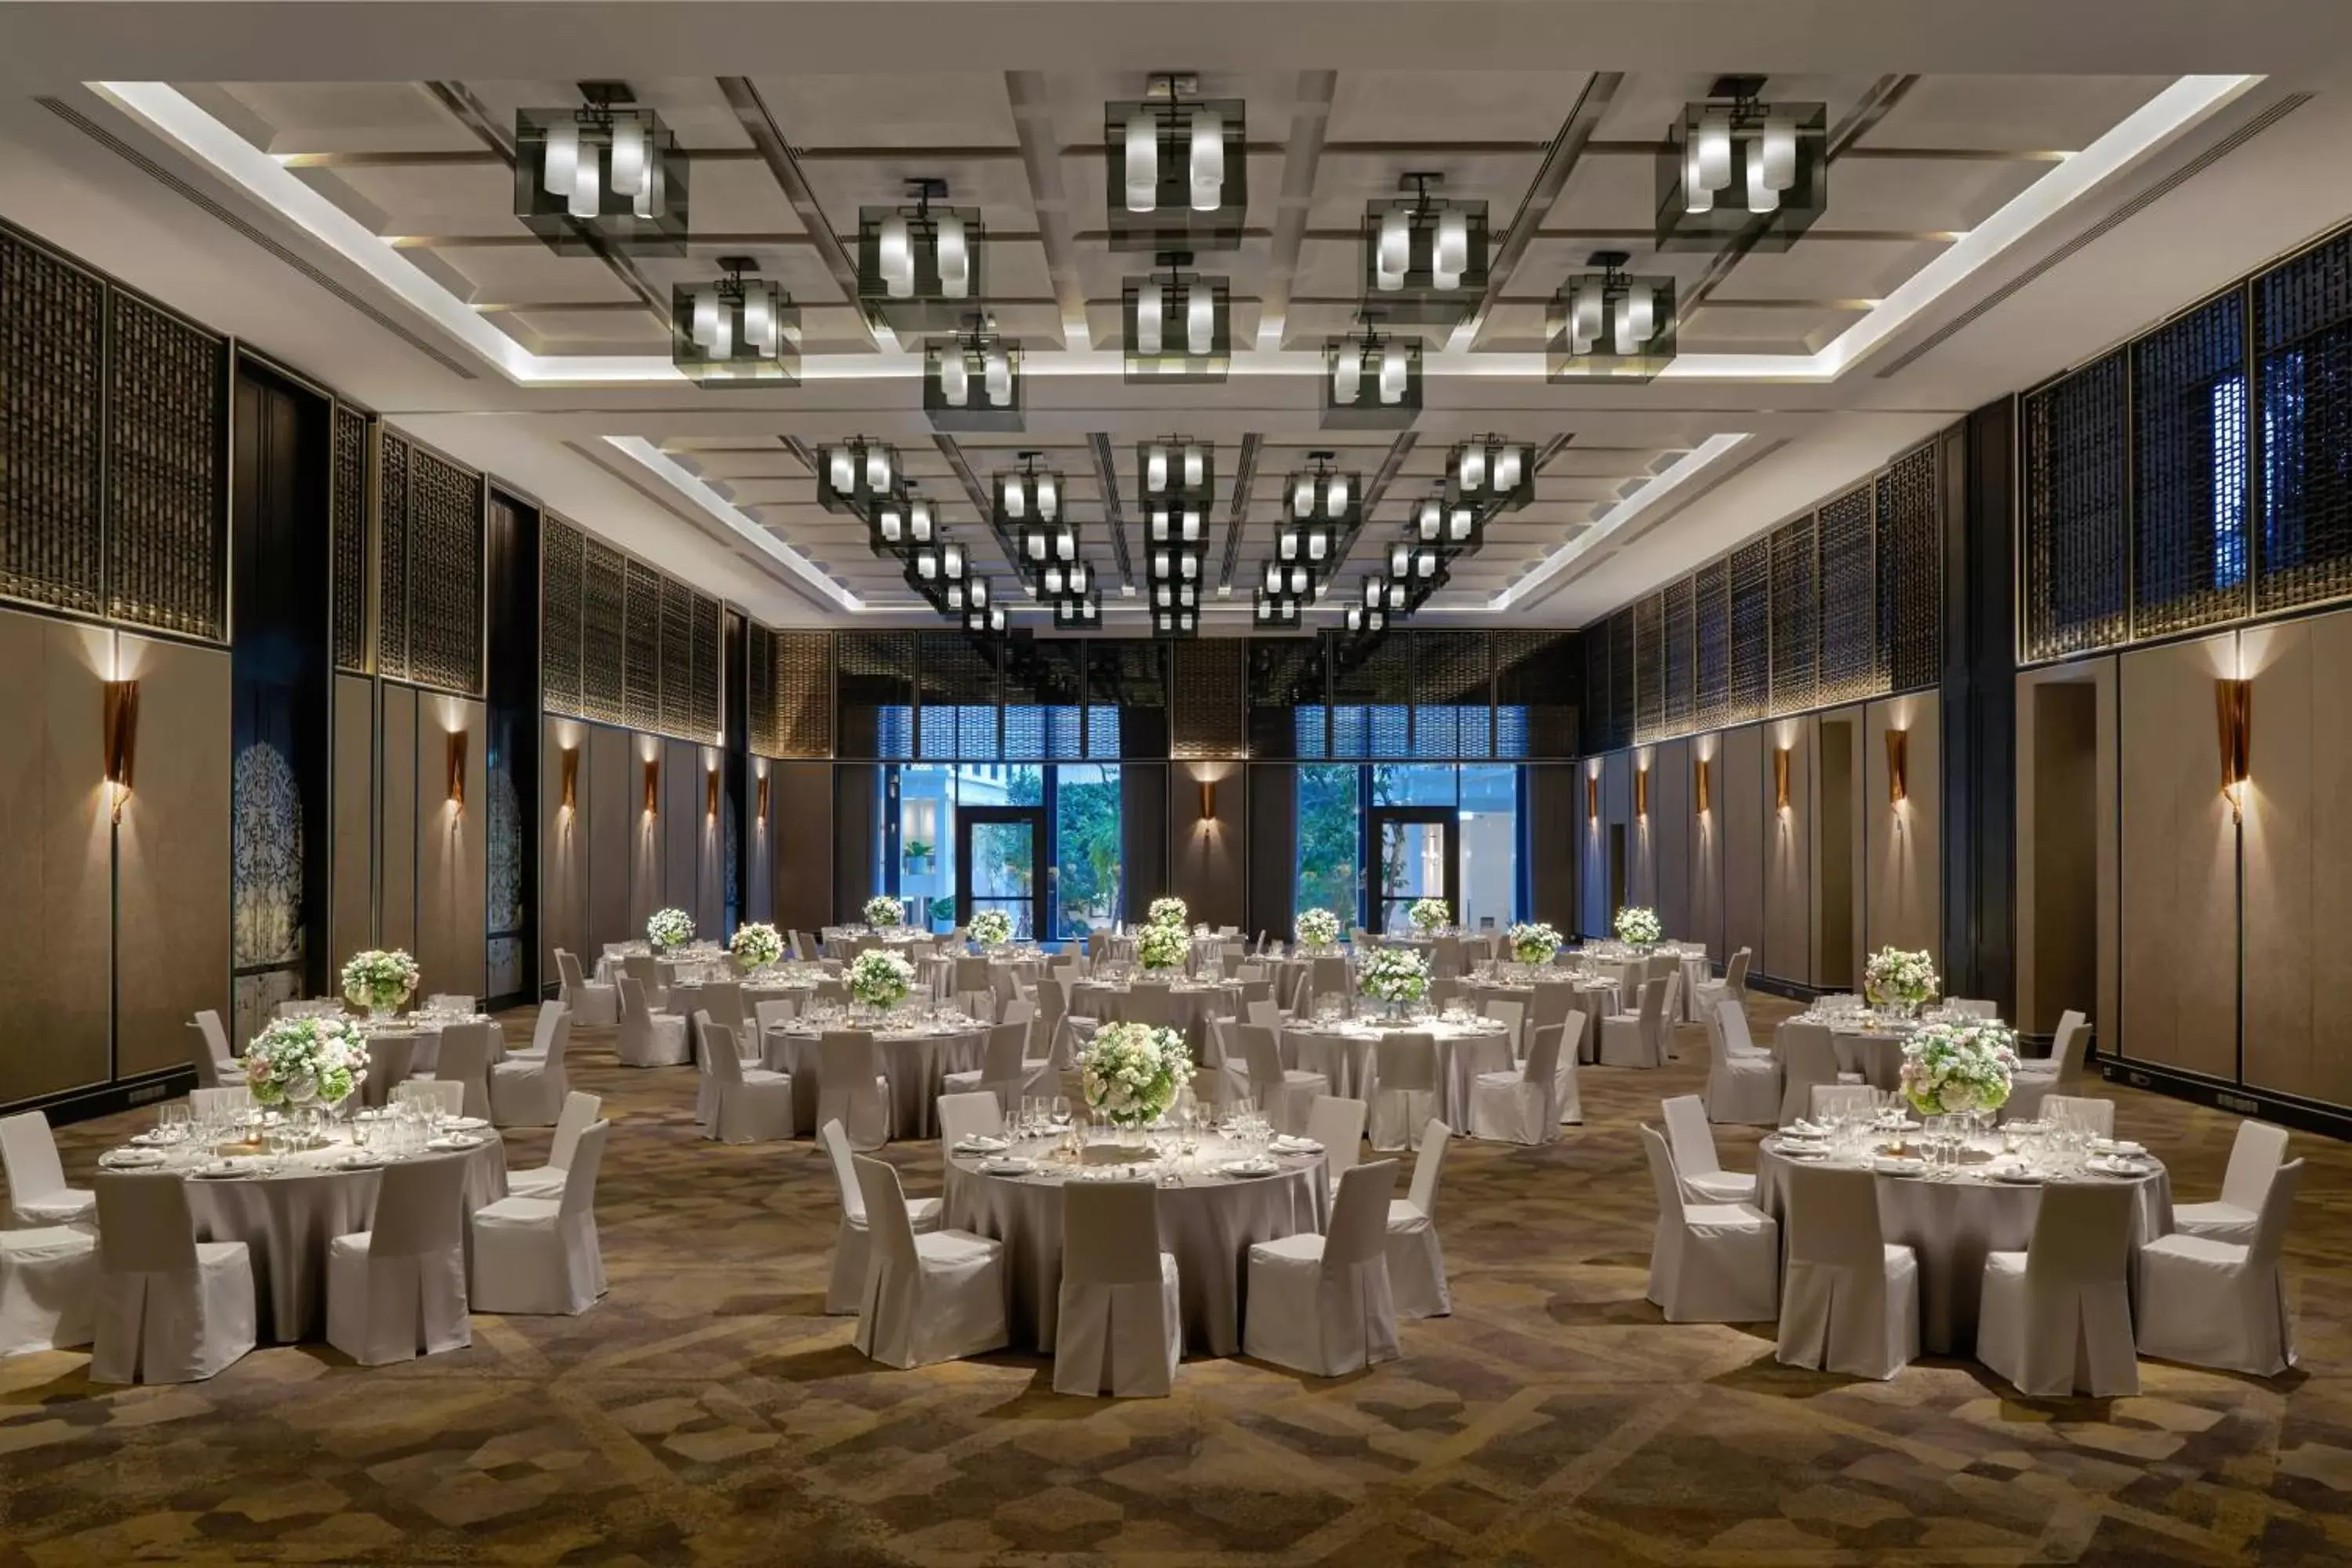 Banquet/Function facilities, Banquet Facilities in Bangkok Marriott Hotel The Surawongse